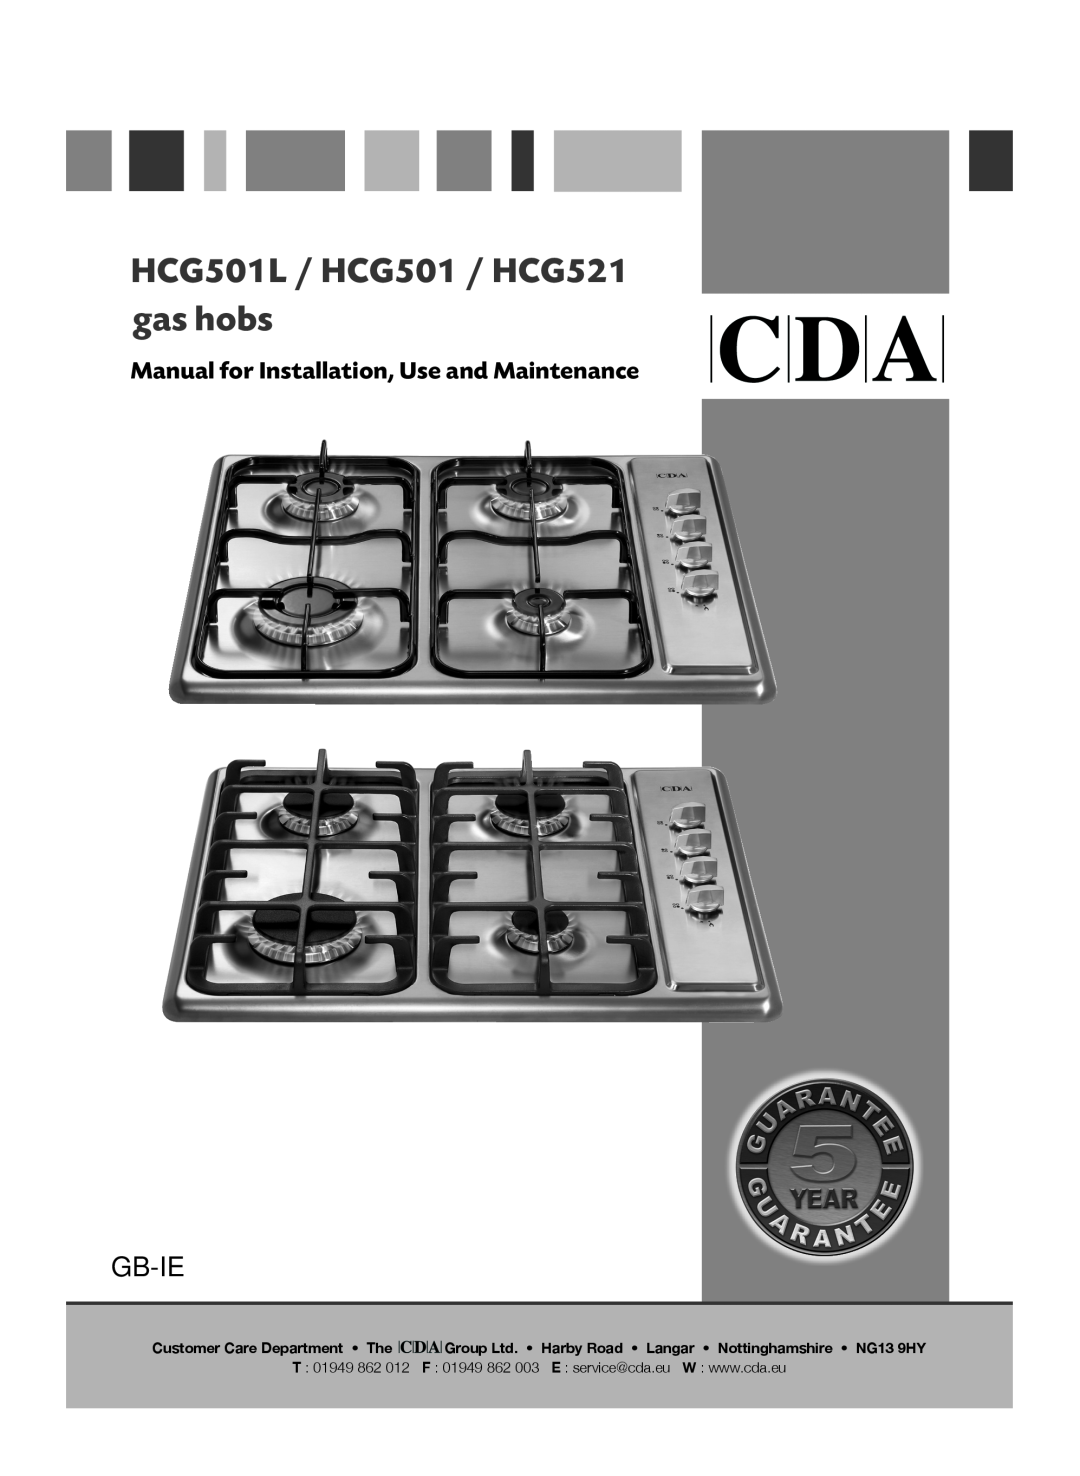 CDA manual Customer Care Department The, HCG501L / HCG501 / HCG521 gas hobs, Gb-Ie 